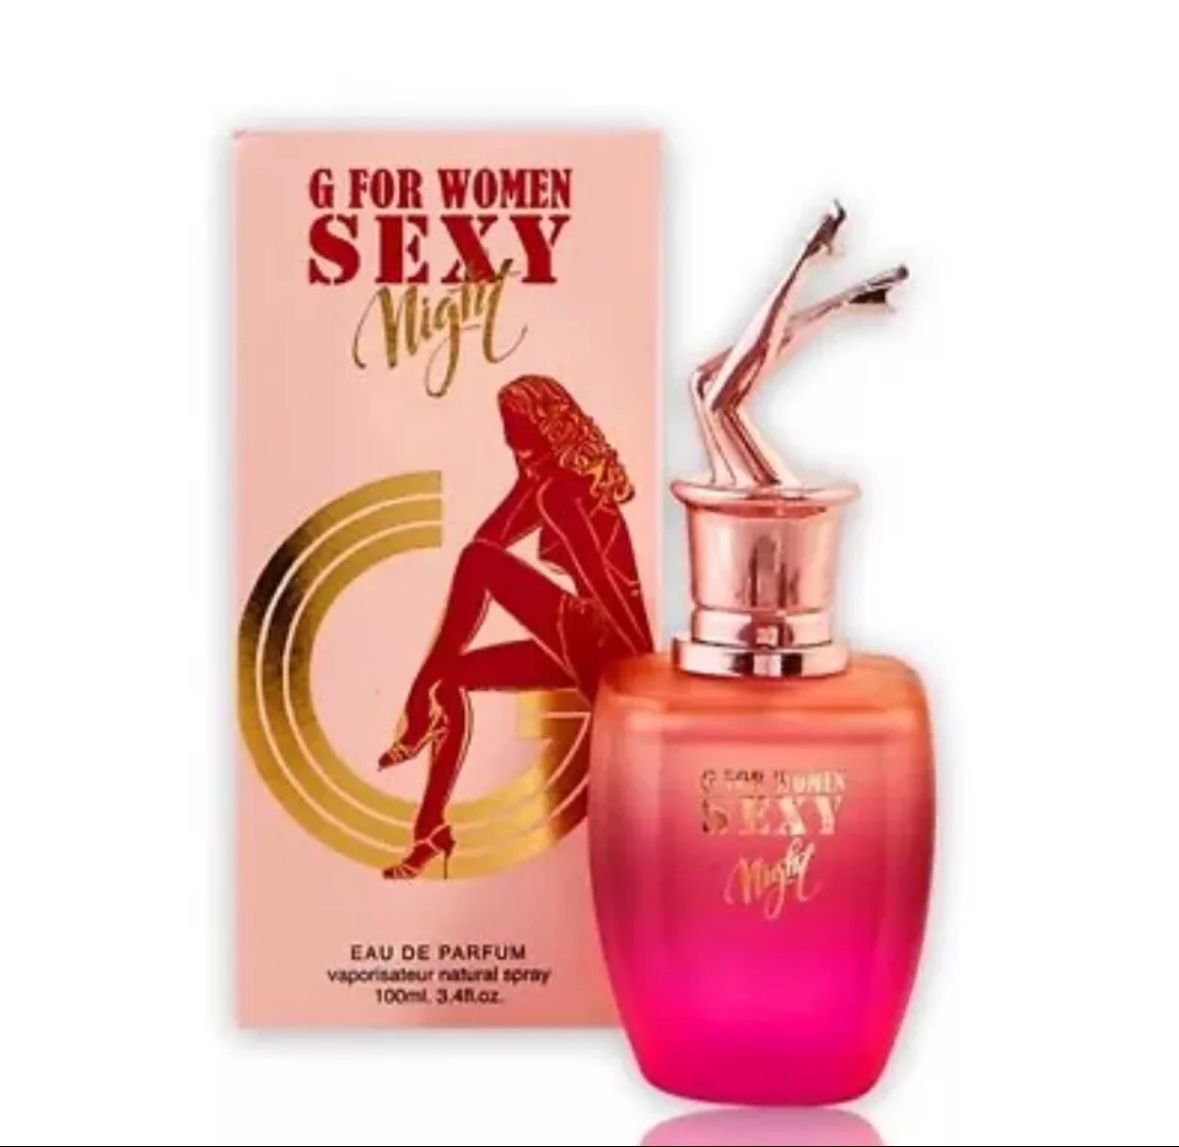 G FOR WOMEN SEXY NIGHT designer 3.4 oz perfume spray long lasting